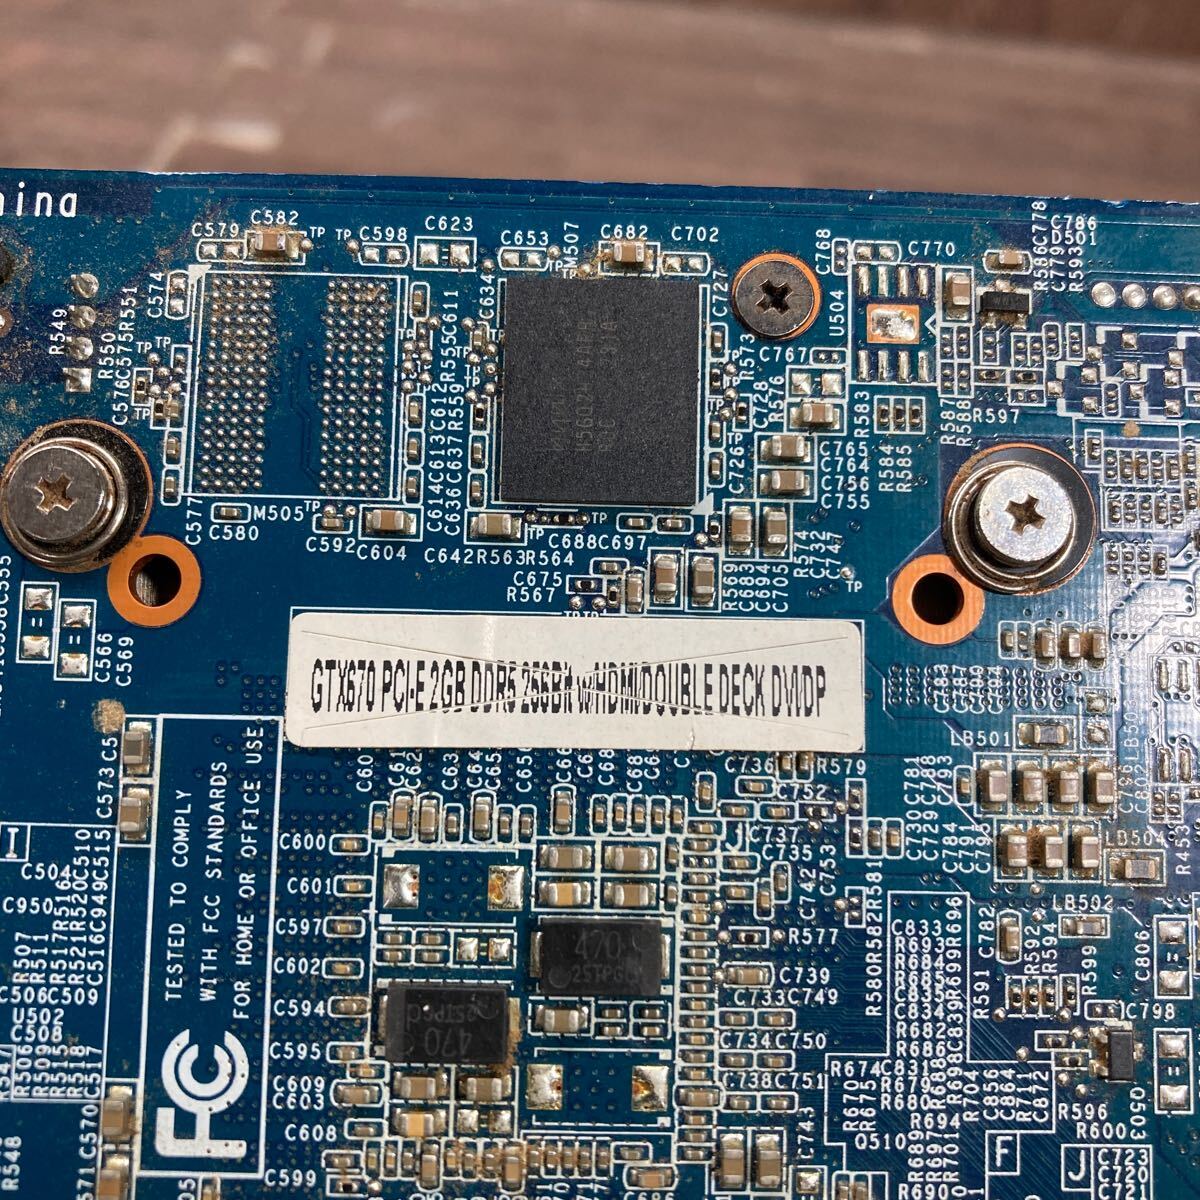 GK 激安 GB-165 グラフィックボード nVIDIA GEFORCE GTX670 PCI-E 2GB DDR5 256Bit 認識.画像出力のみ確認 中古品 同梱可能の画像7